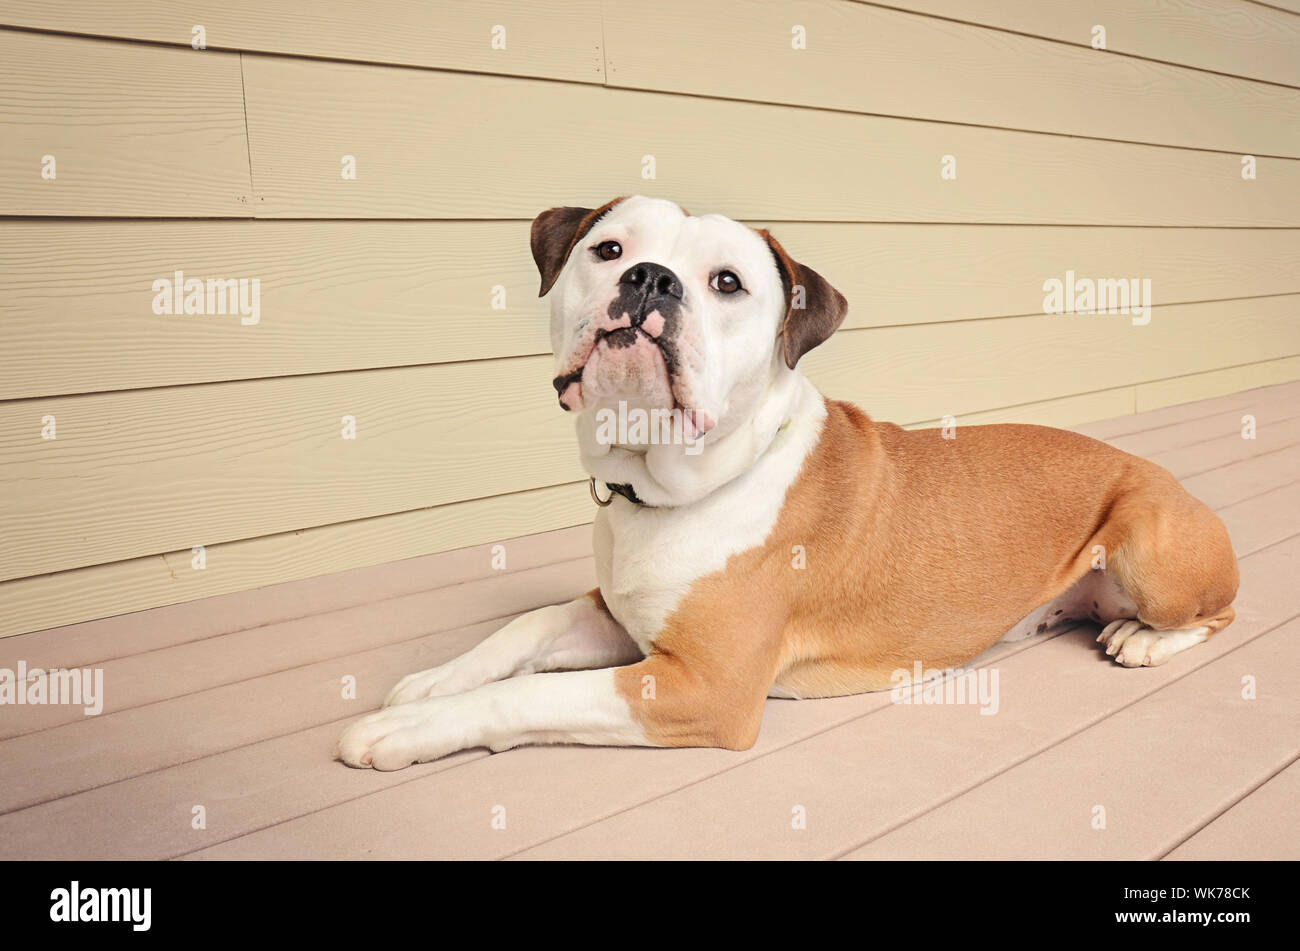 An Olde English Bulldogge laying down outdoors Stock Photo